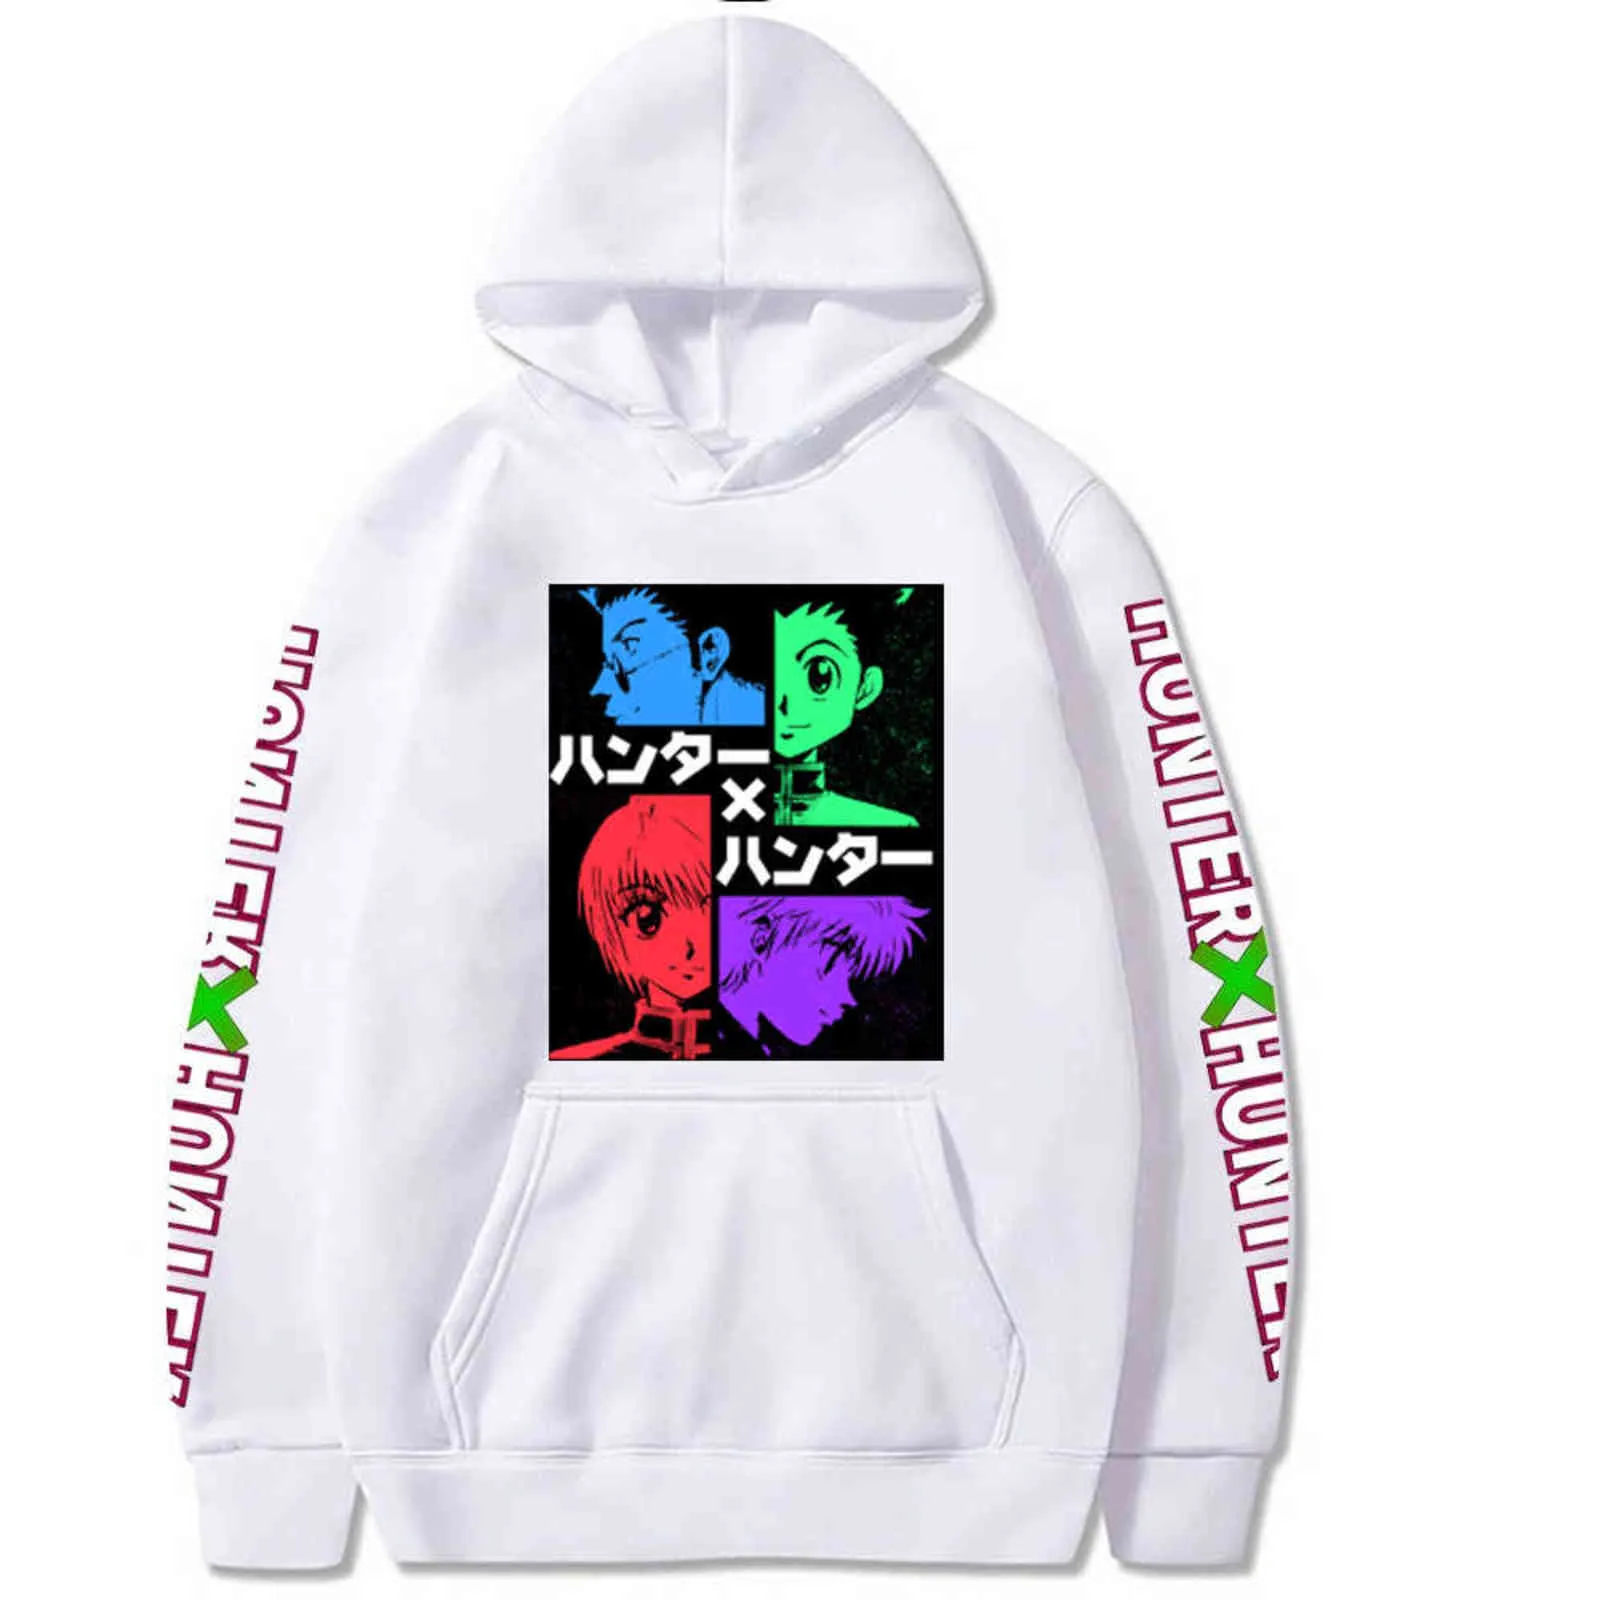 Anime Hunter X Hunter Hoodie Sweatshirts Kurapika GON FREECSS Hoodies Pullovers Tops Y211118